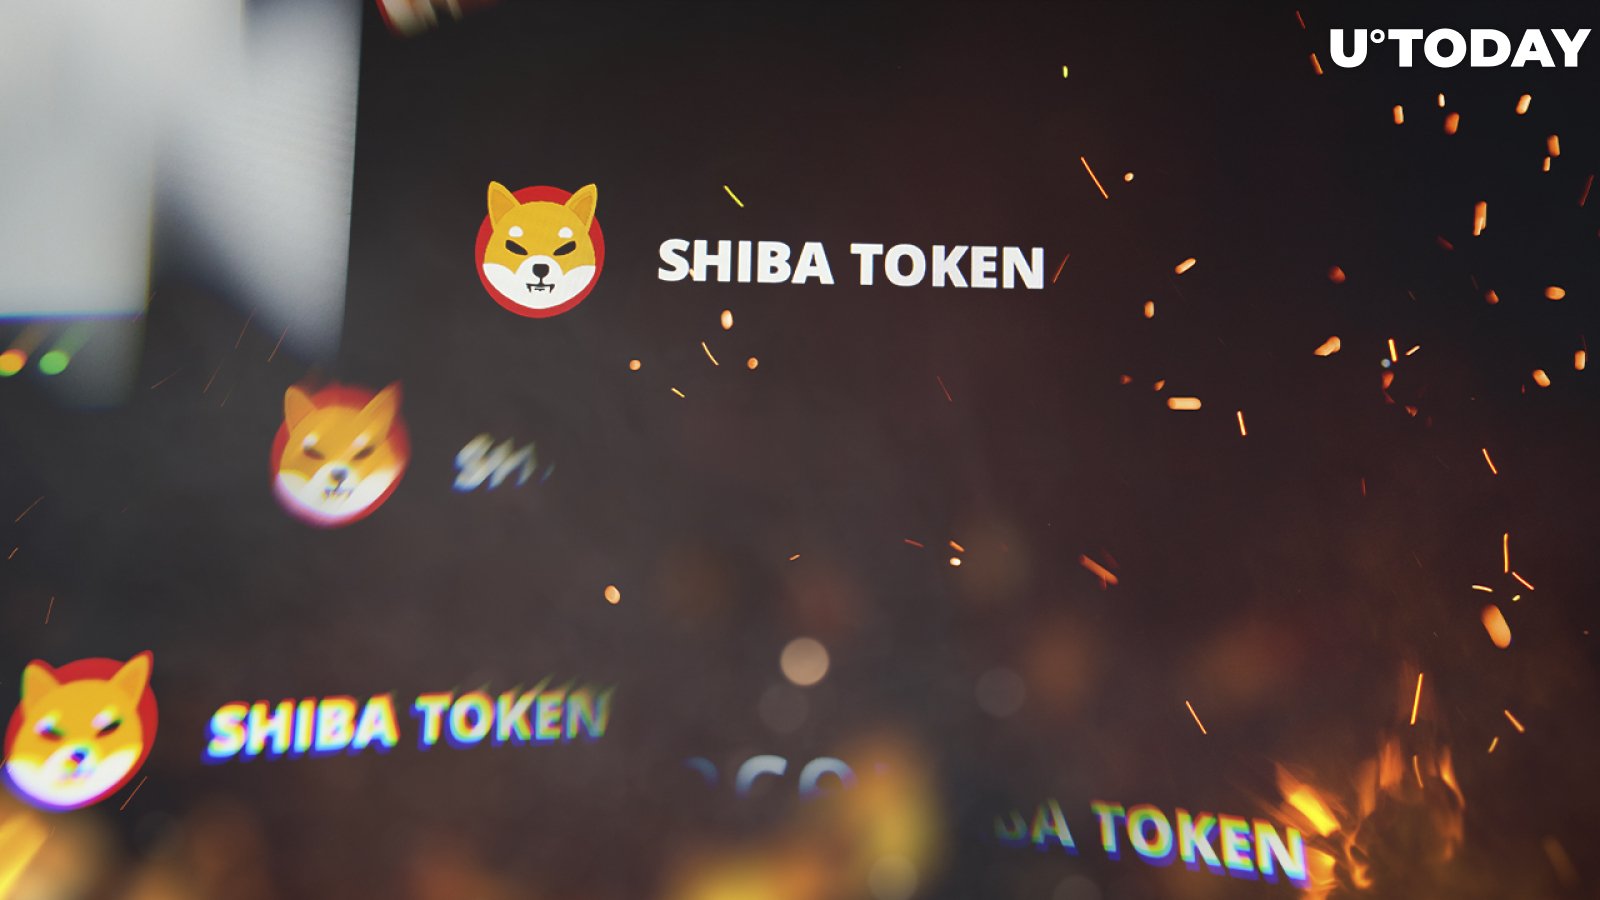 22 Million Shiba Inu Burned in Last 24+ Hours, 917 Million Tokens Gone Within Week: Details